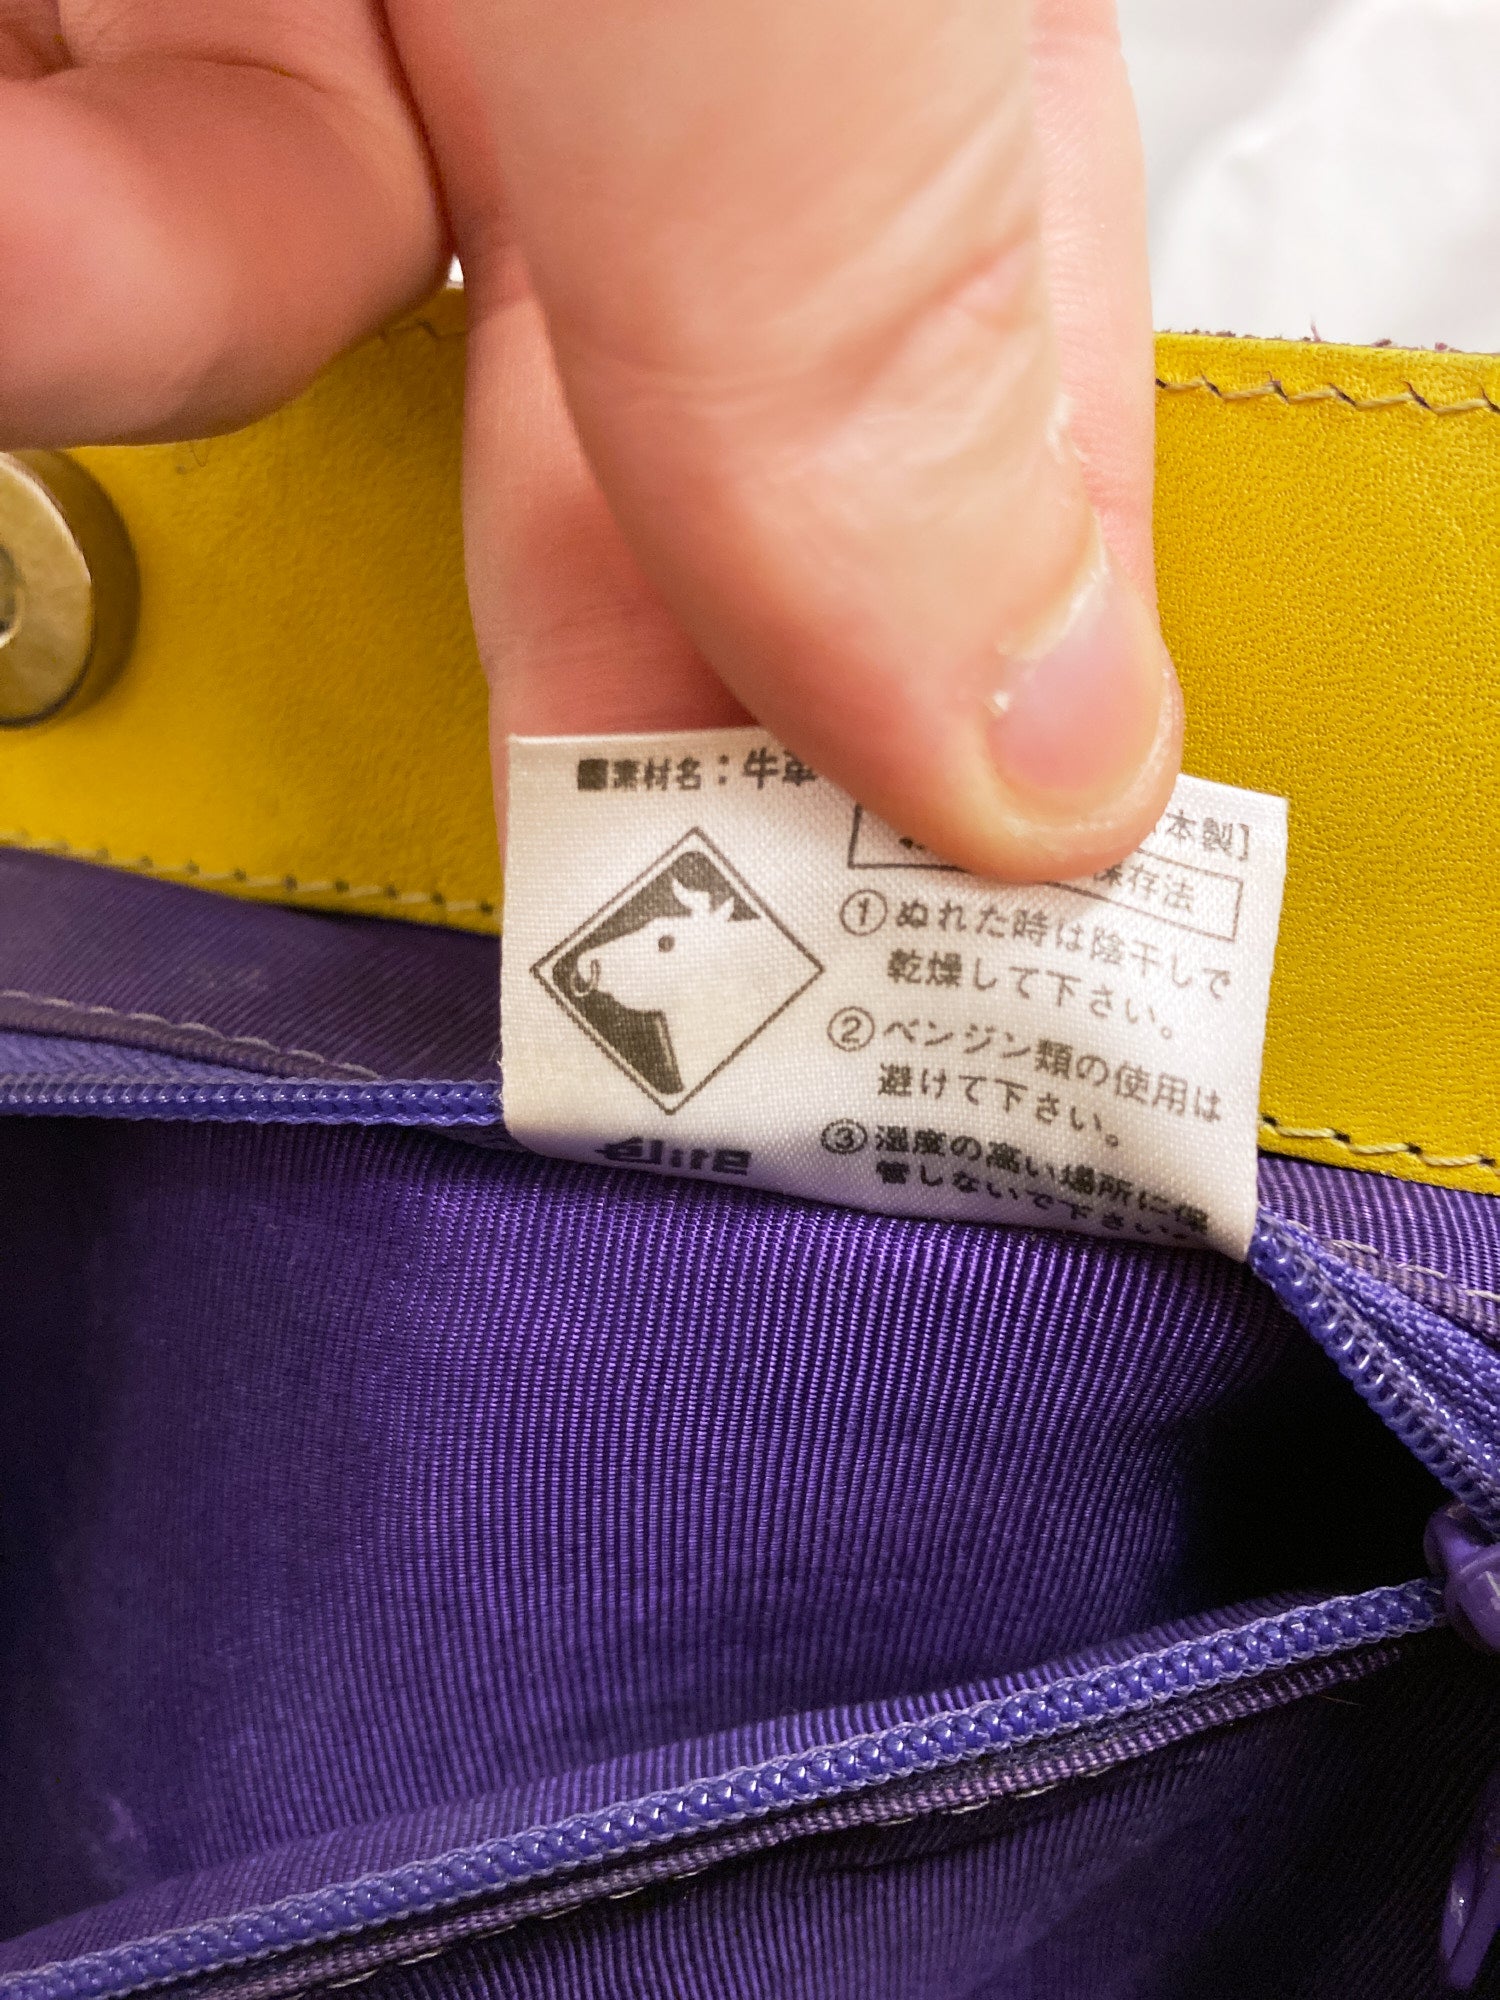 Masaki Matsushima Paris yellow and purple cowhide leather tote bag